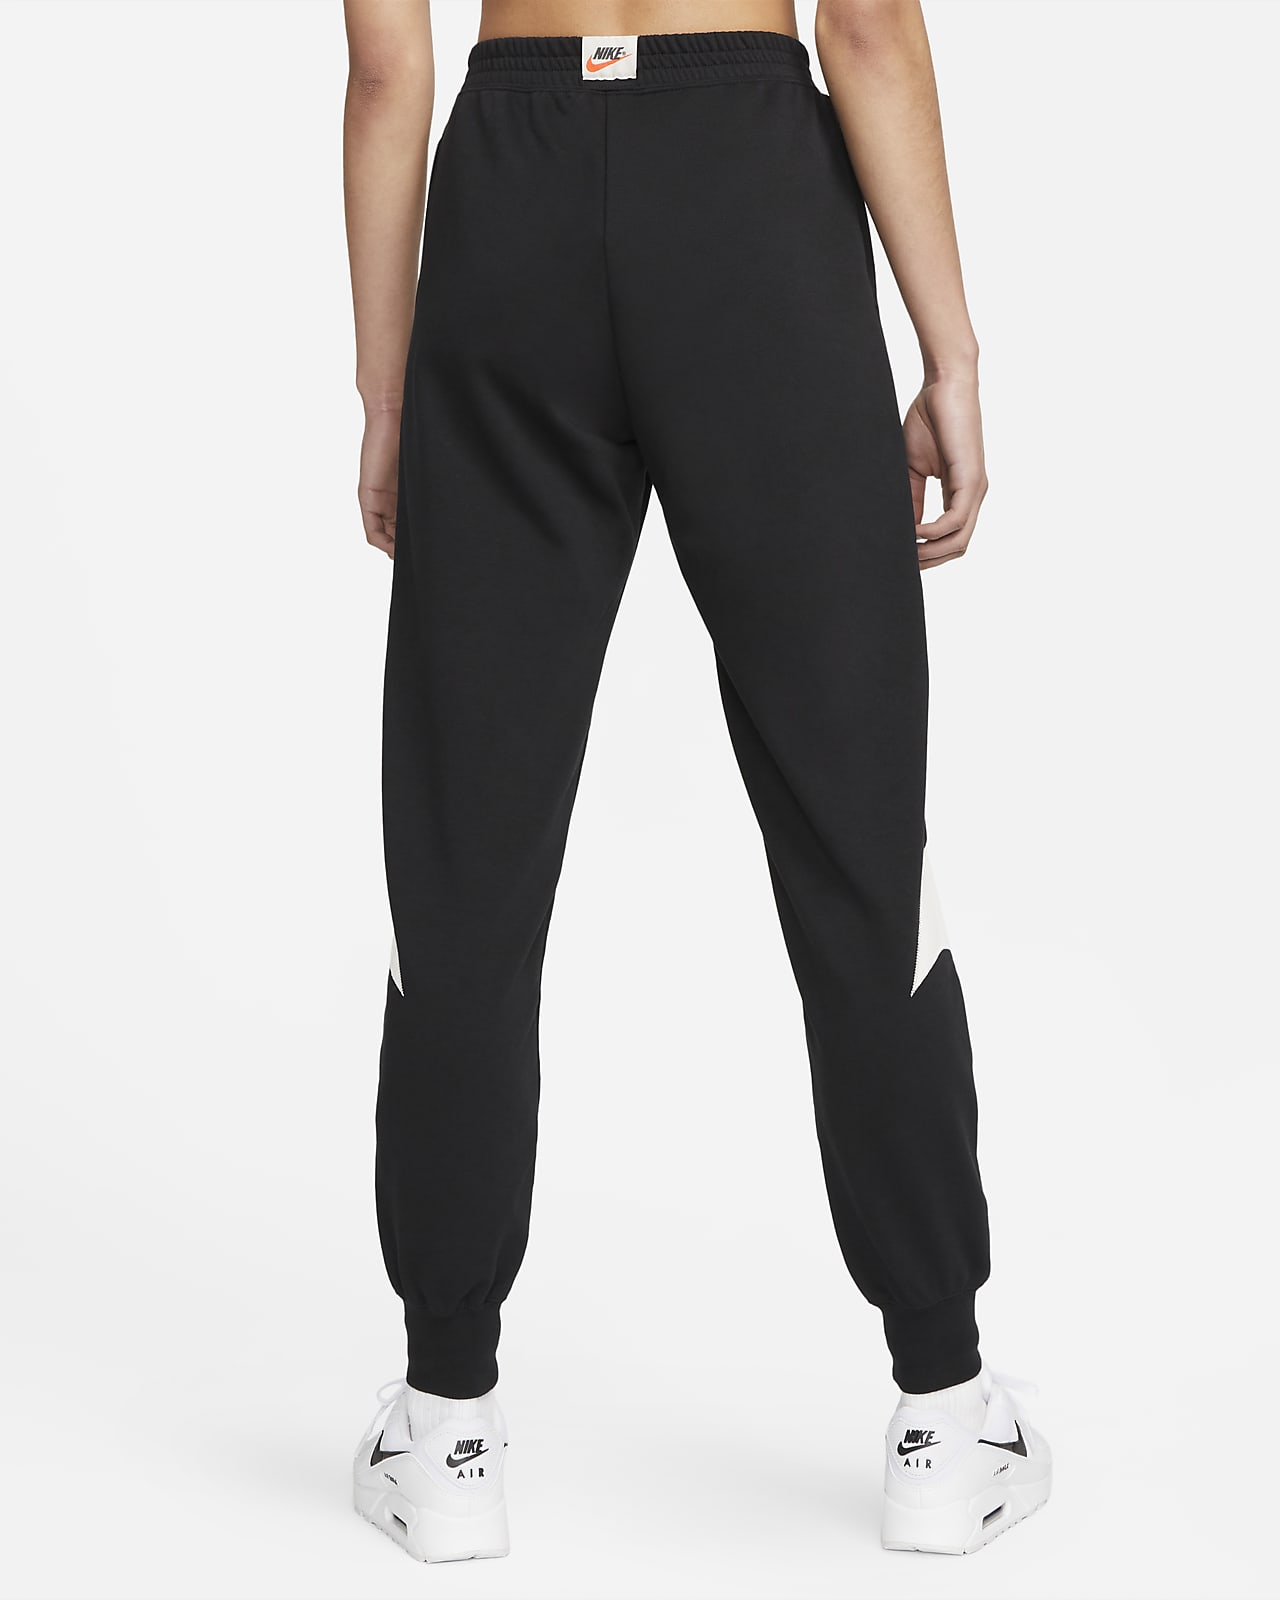 Pantalones French Terry para mujer Nike Sportswear Circa Nike.com